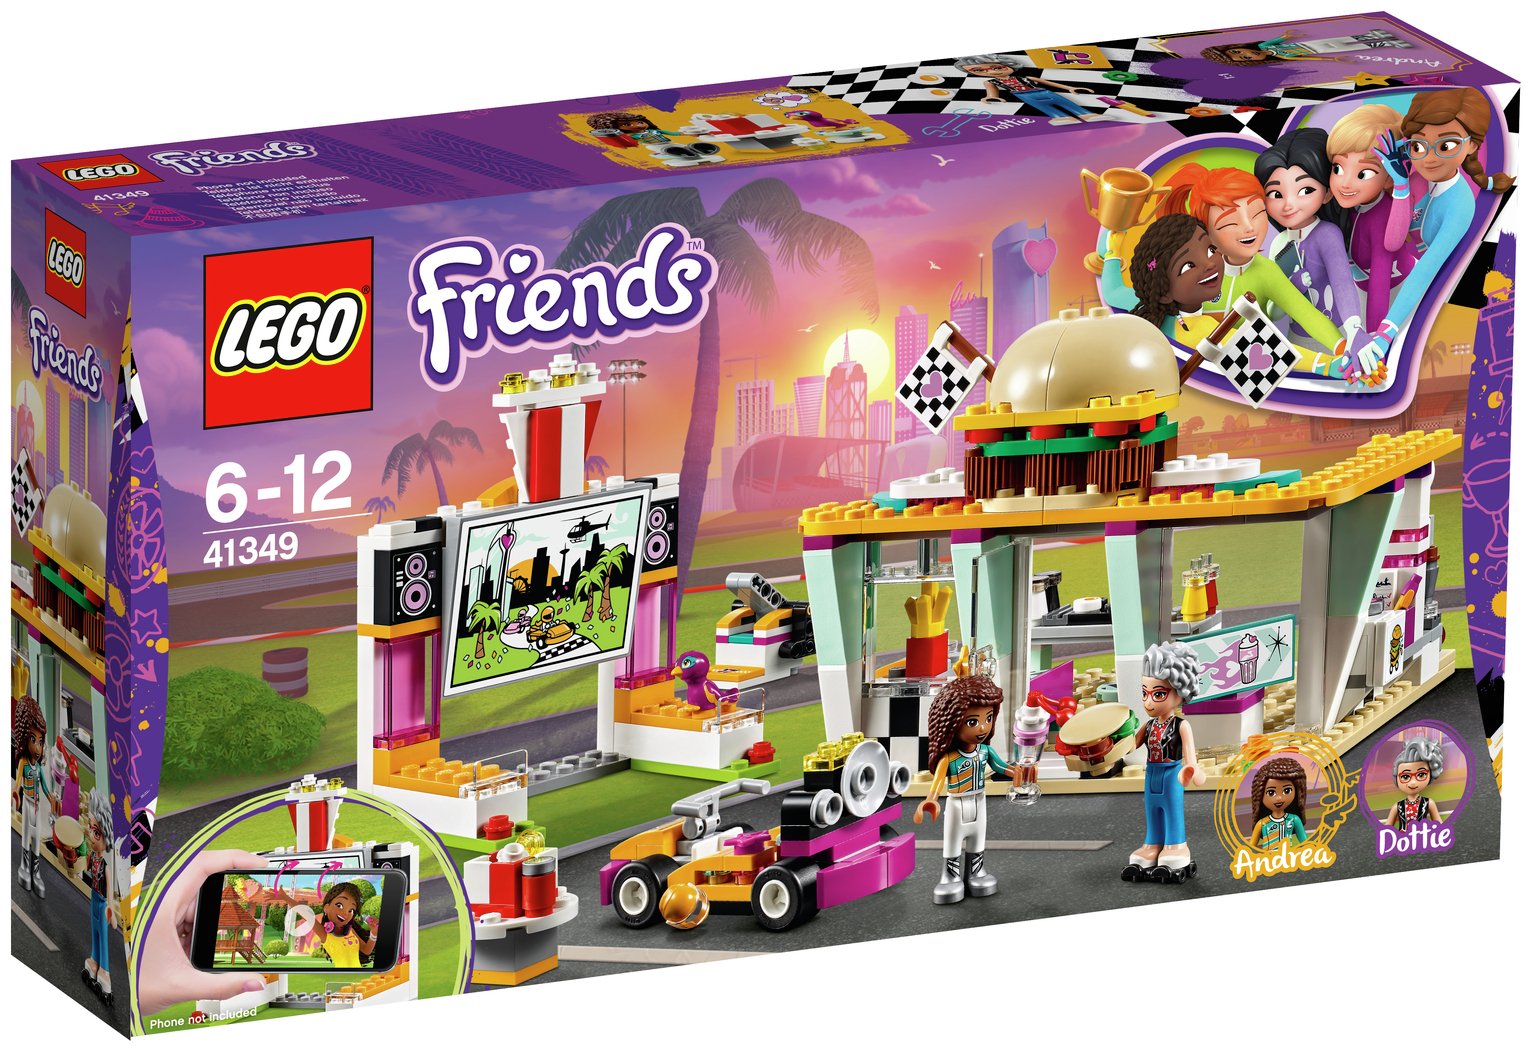 LEGO Friends Heartlake Drifting Retro Diner Playset Reviews